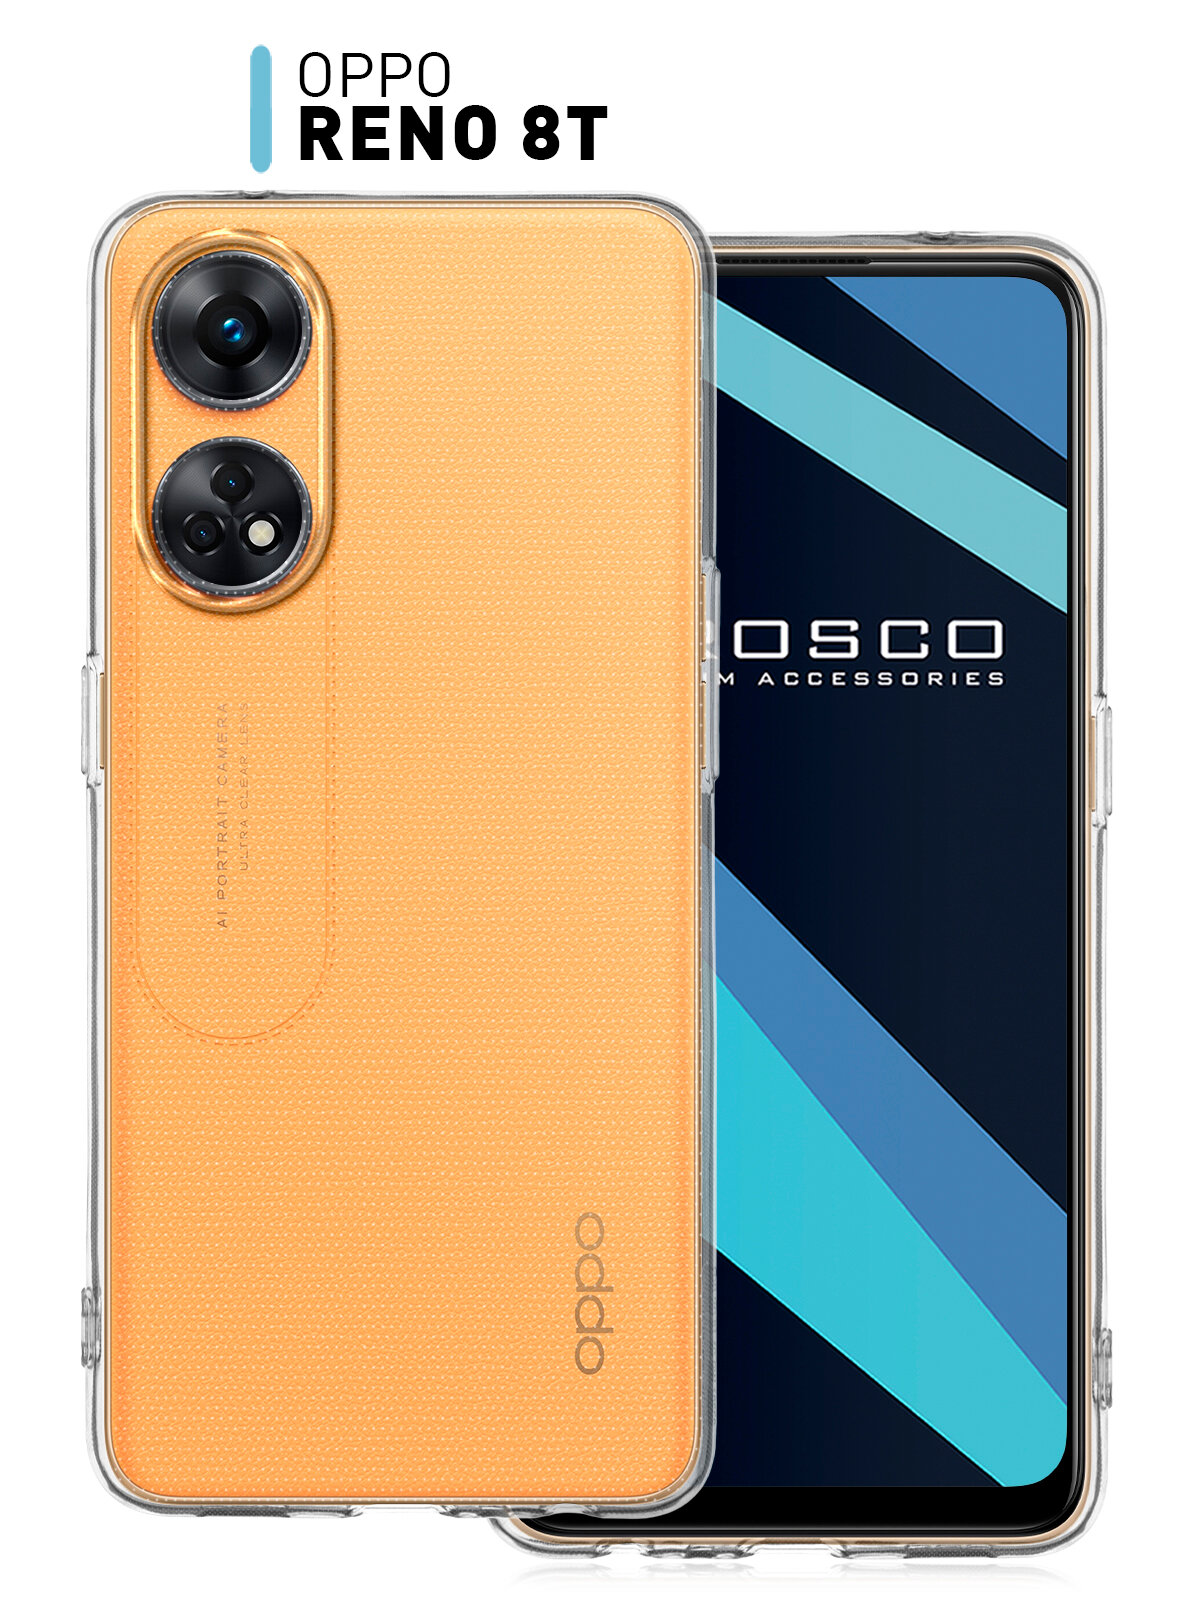 Силиконовый чехол для Oppo Reno 8T 4G (Оппо Рено 8Т Oppo Reno8 T) накладка с защитой модуля камер гибкий прозрачный ROSCO